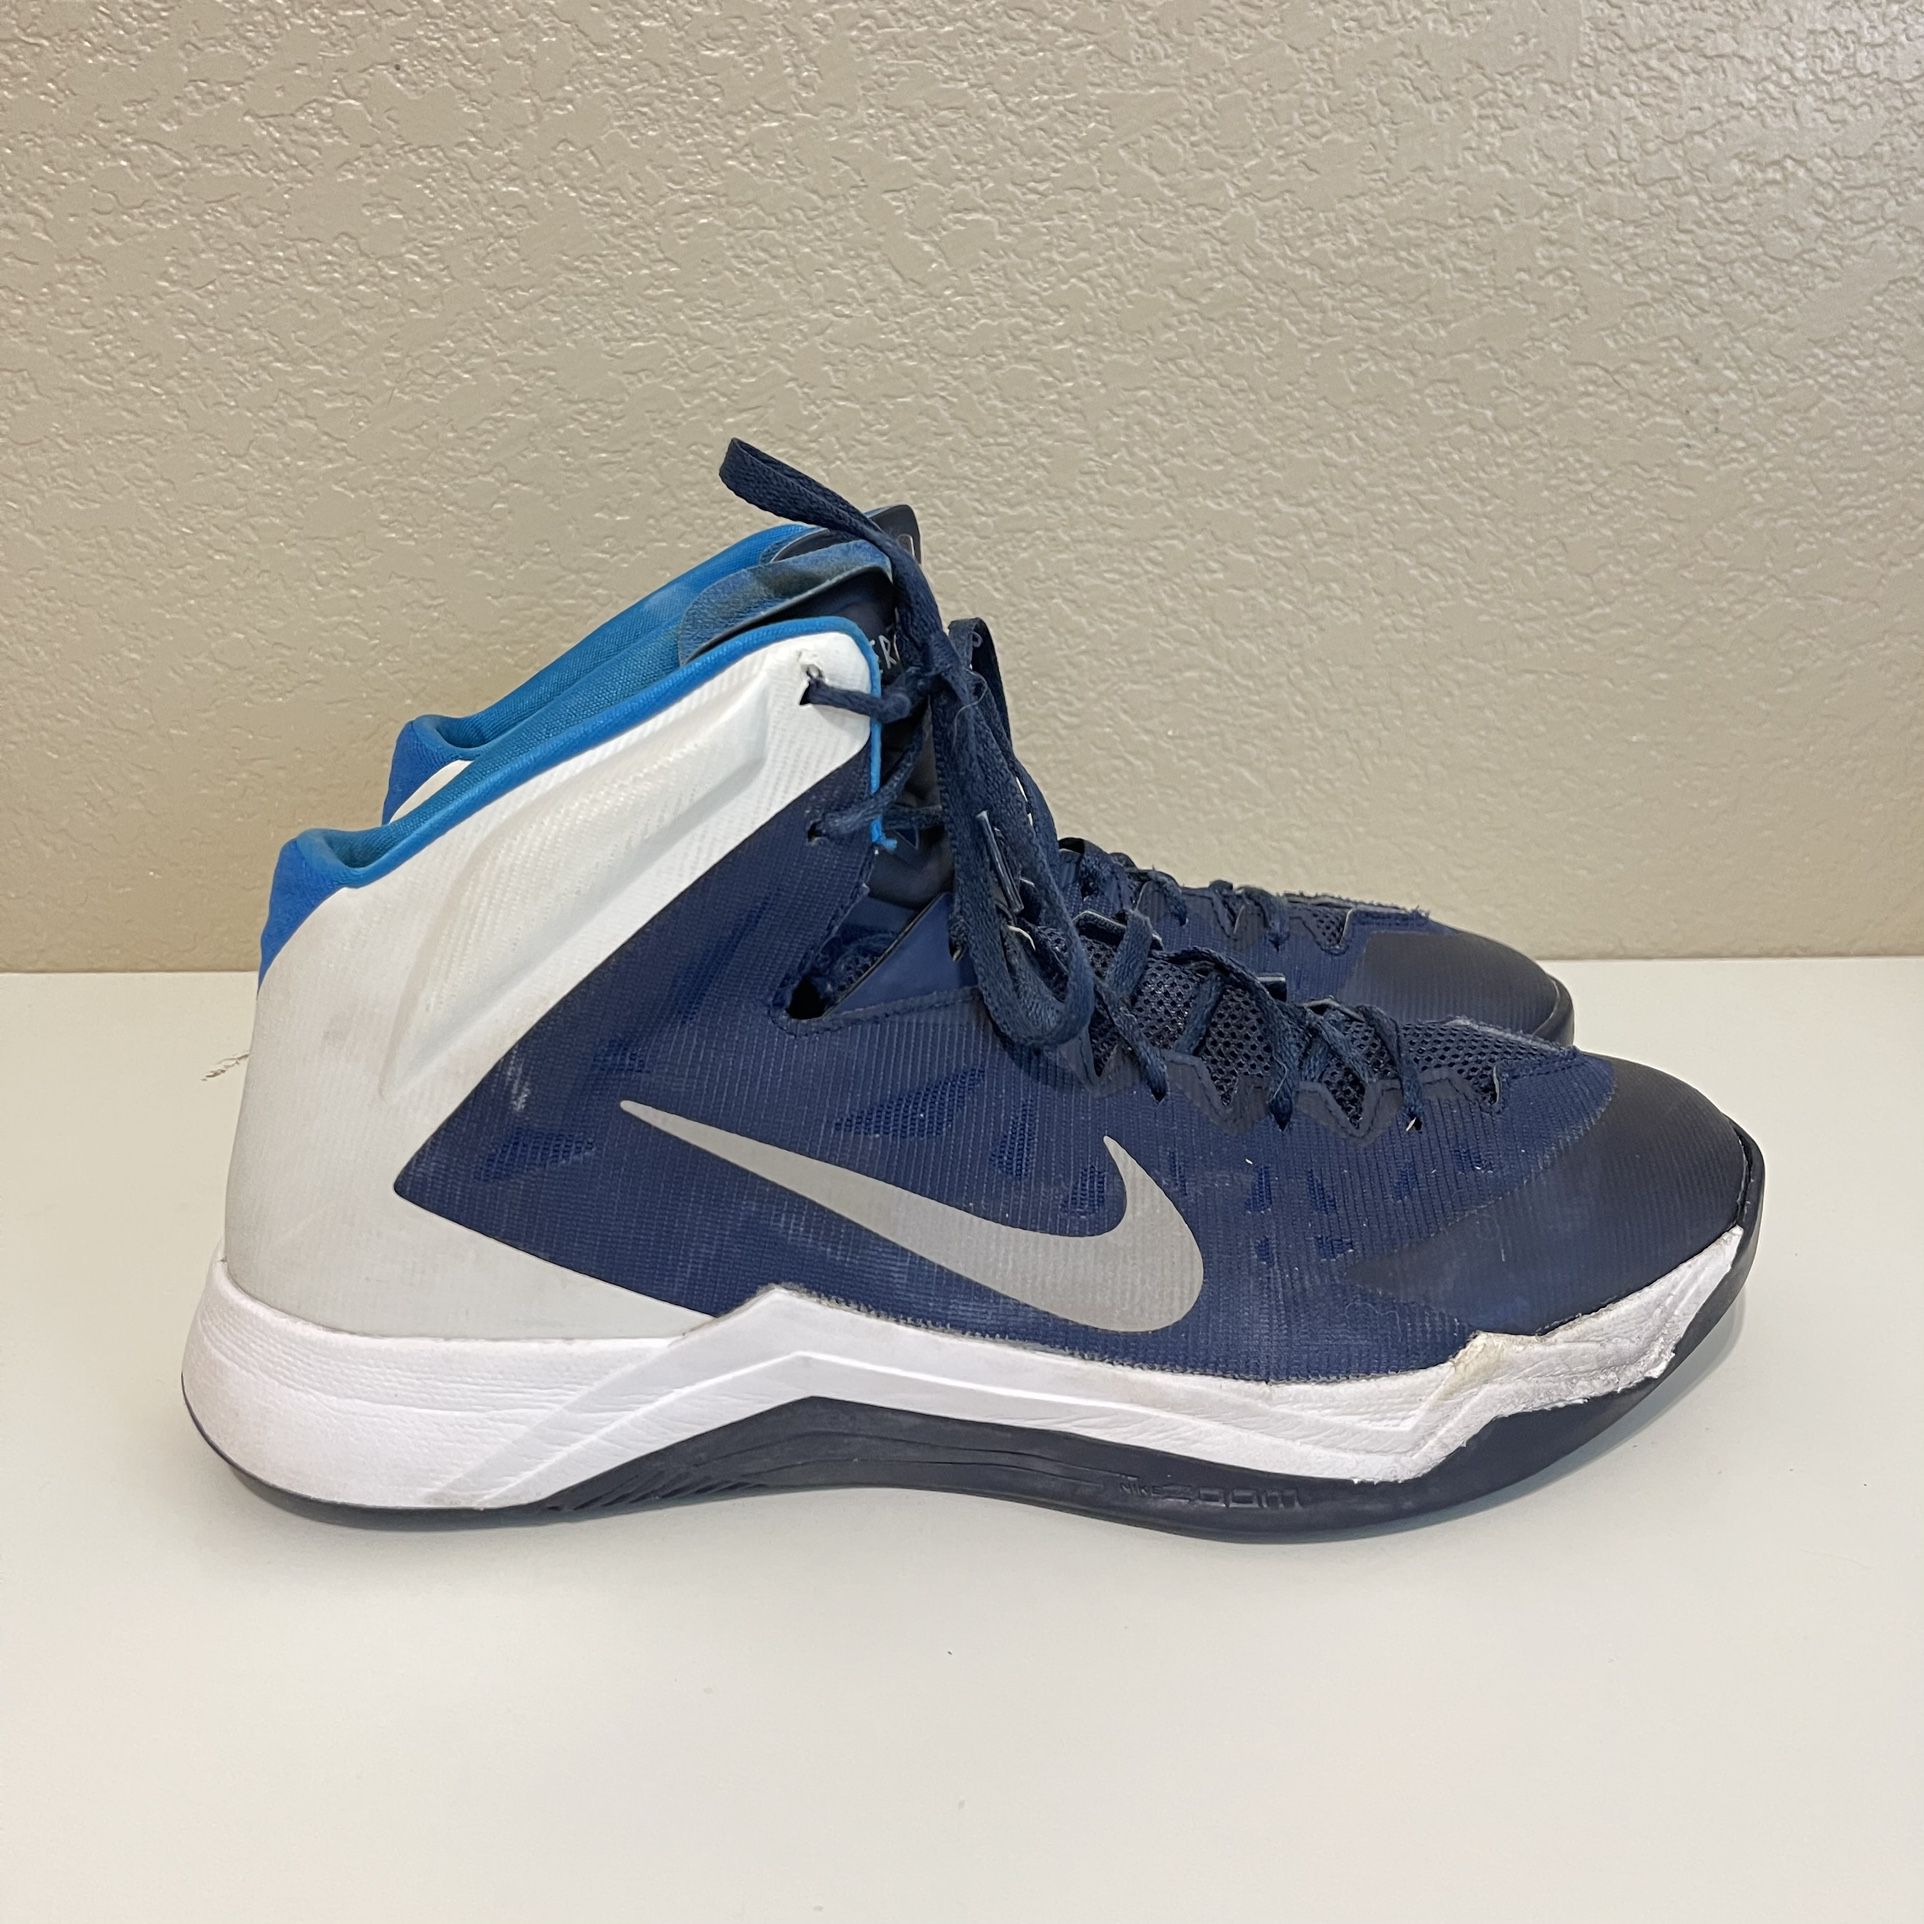 Nike Basketball Shoes Size 15 